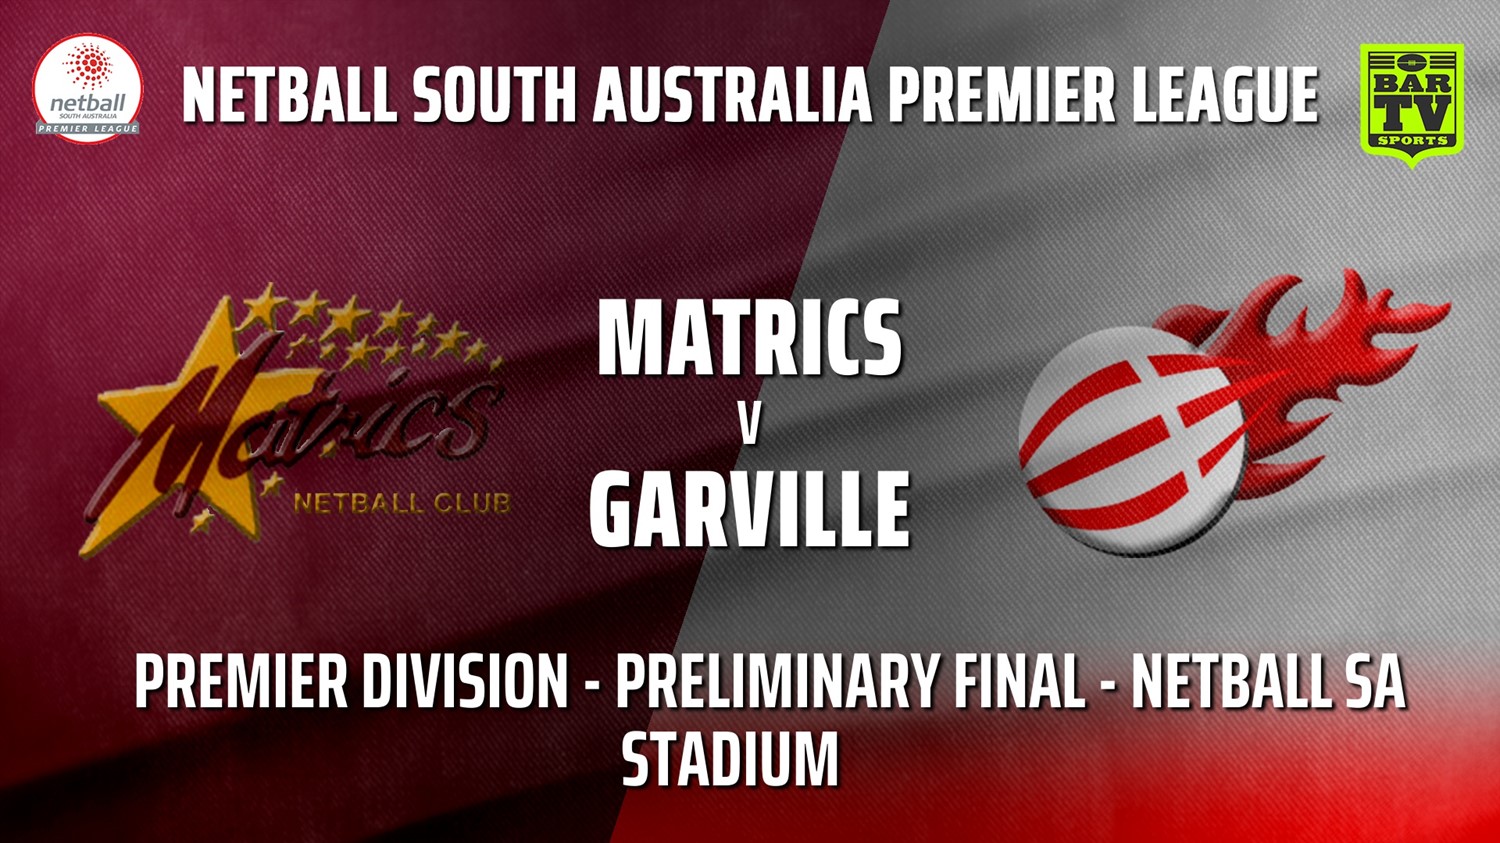 210827-SA Premier League Preliminary Final - Premier Division - Matrics v Garville Slate Image